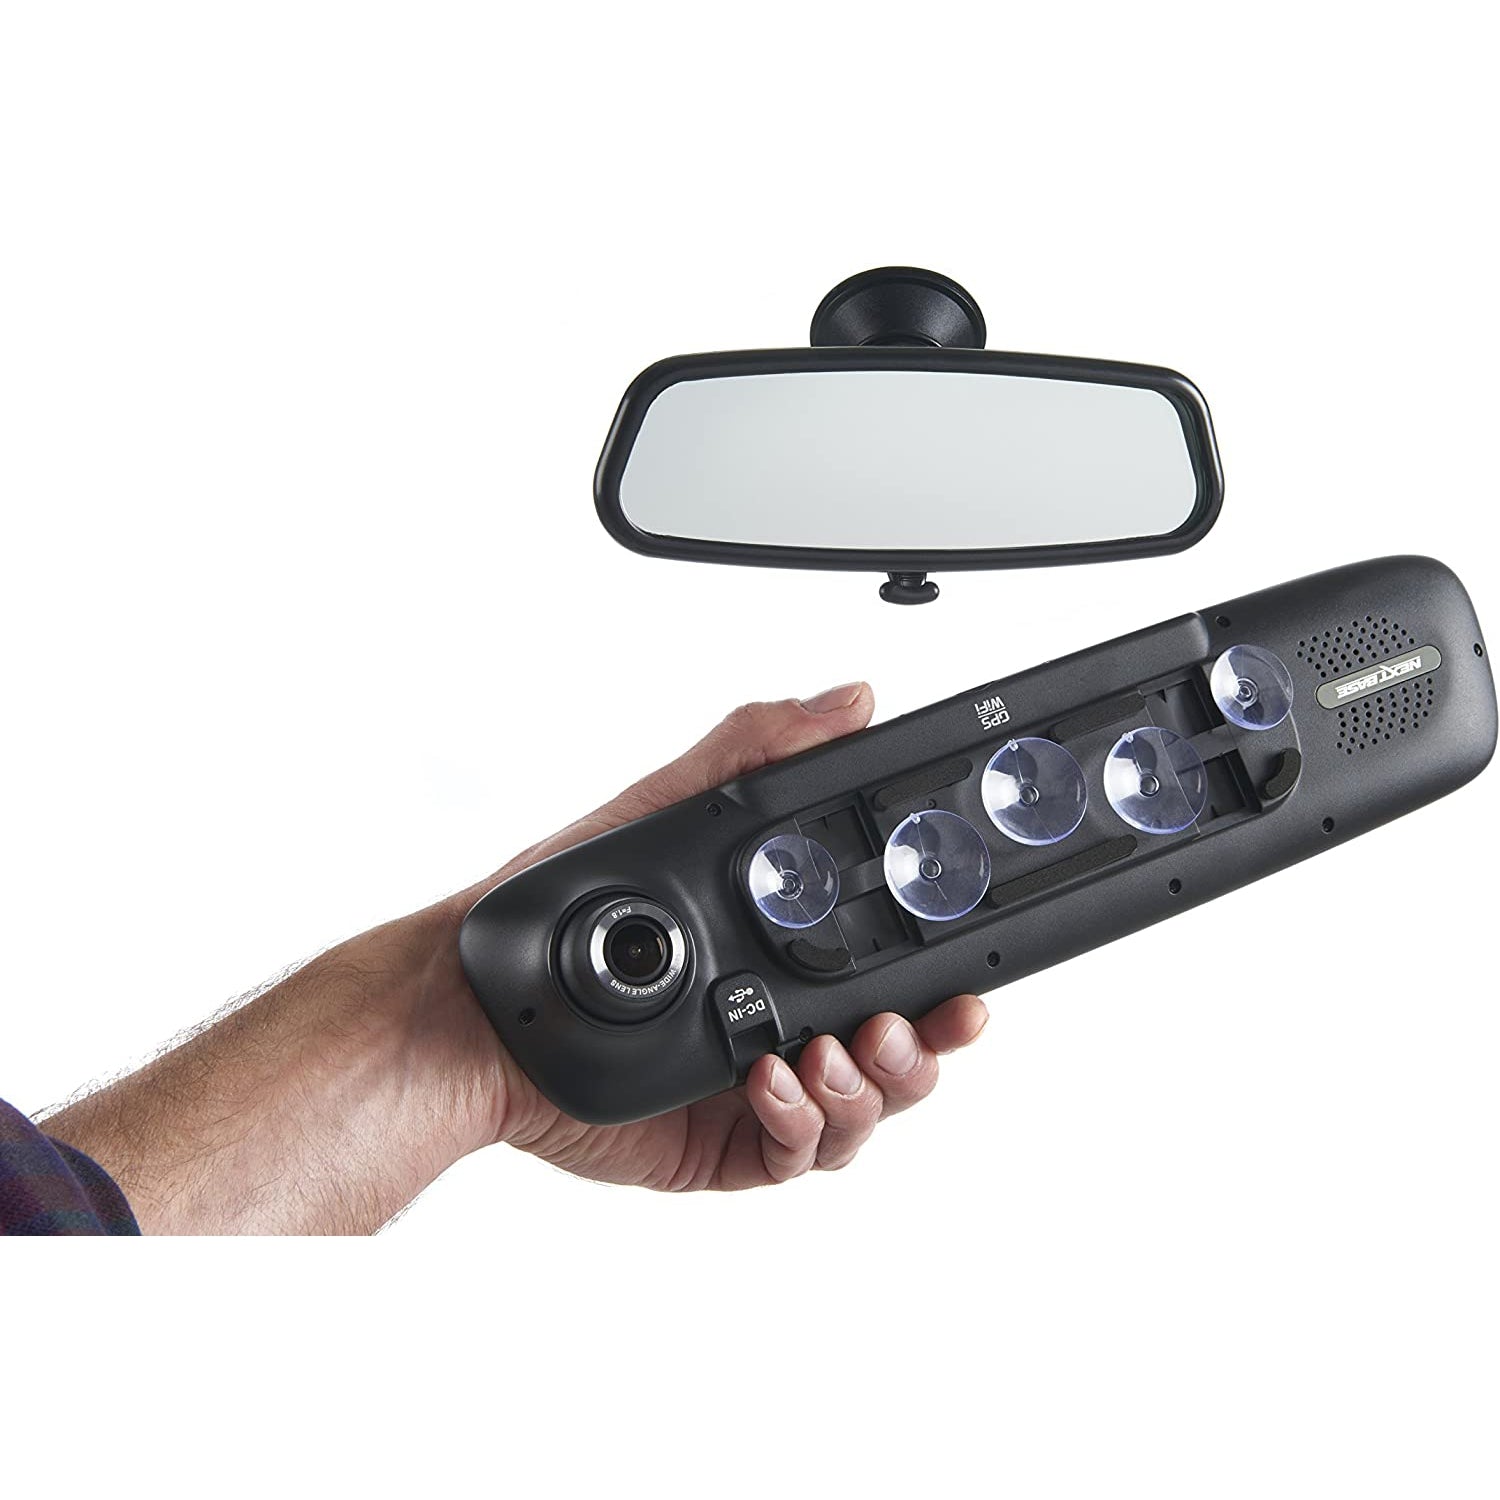 Nextbase Mirror Dash Cam, 1080p HD, with Wi-Fi & GPS